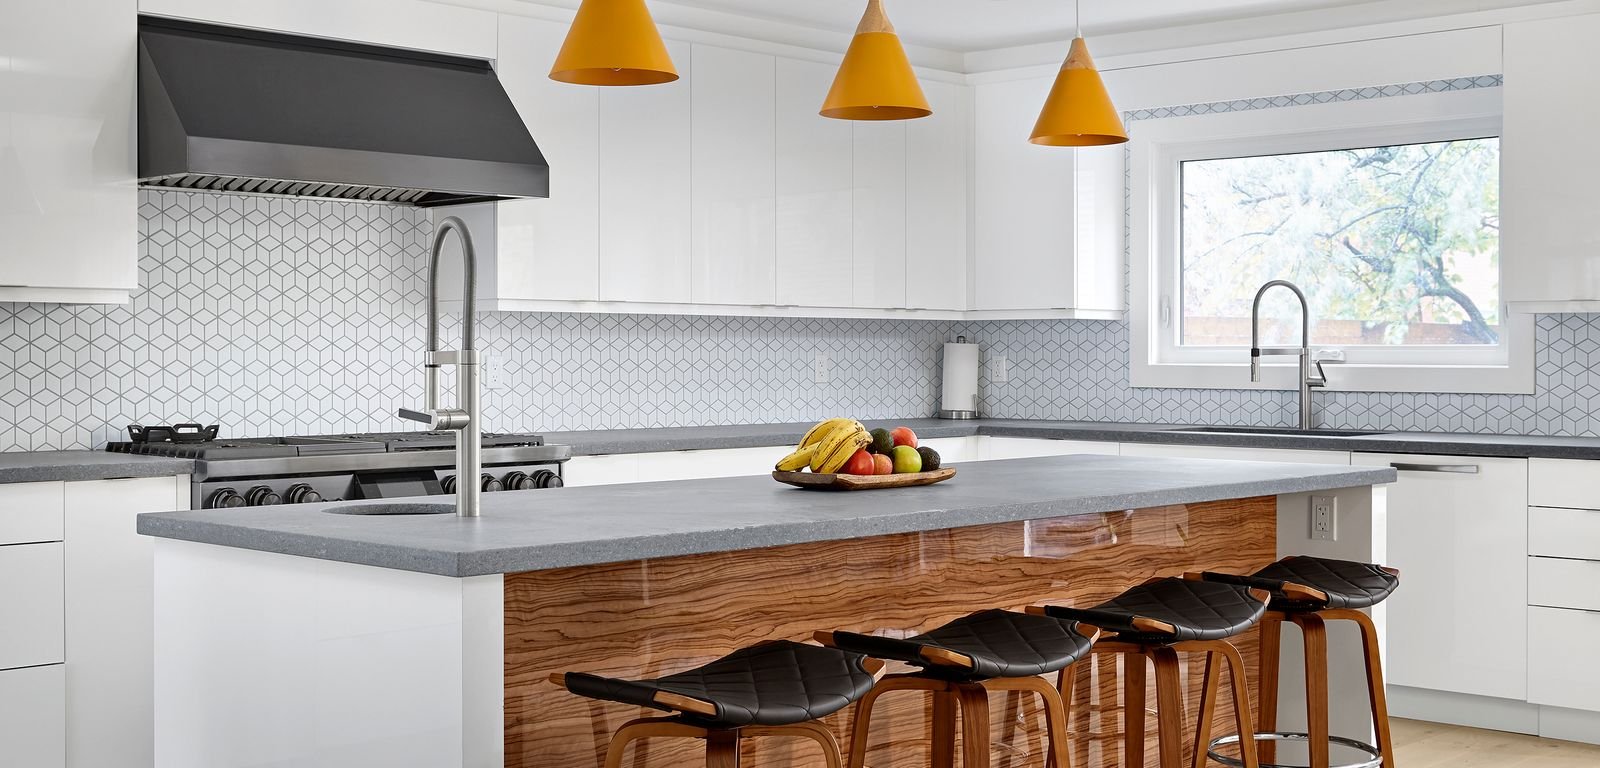 custom kitchen renovation with barstool at island yellow pendant lights and hexagonal backsplash in markham